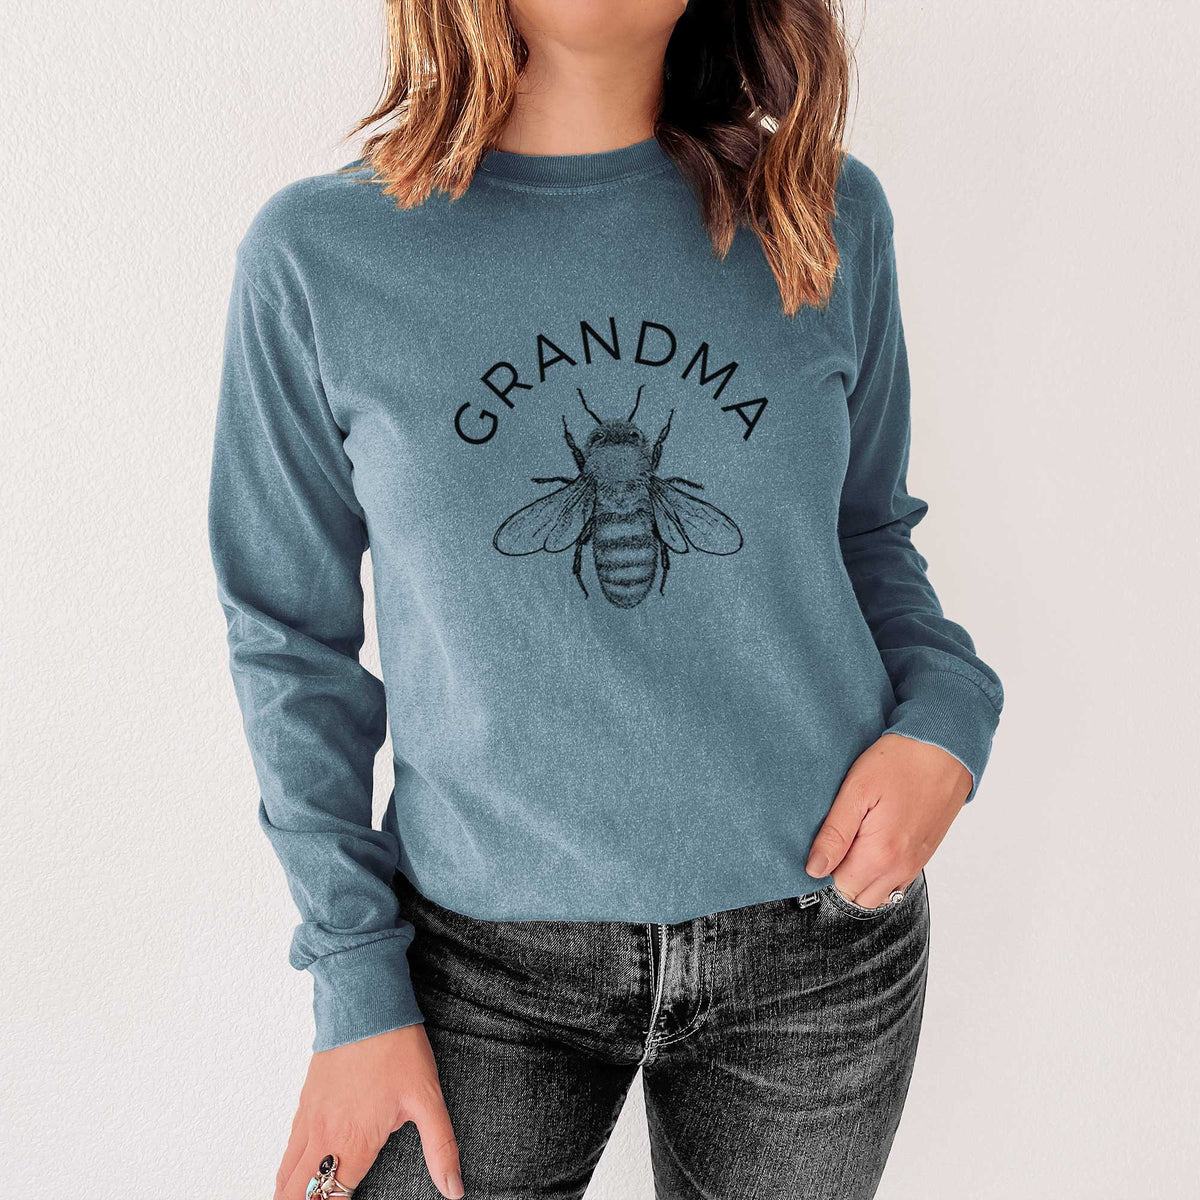 Grandma Bee - Heavyweight 100% Cotton Long Sleeve